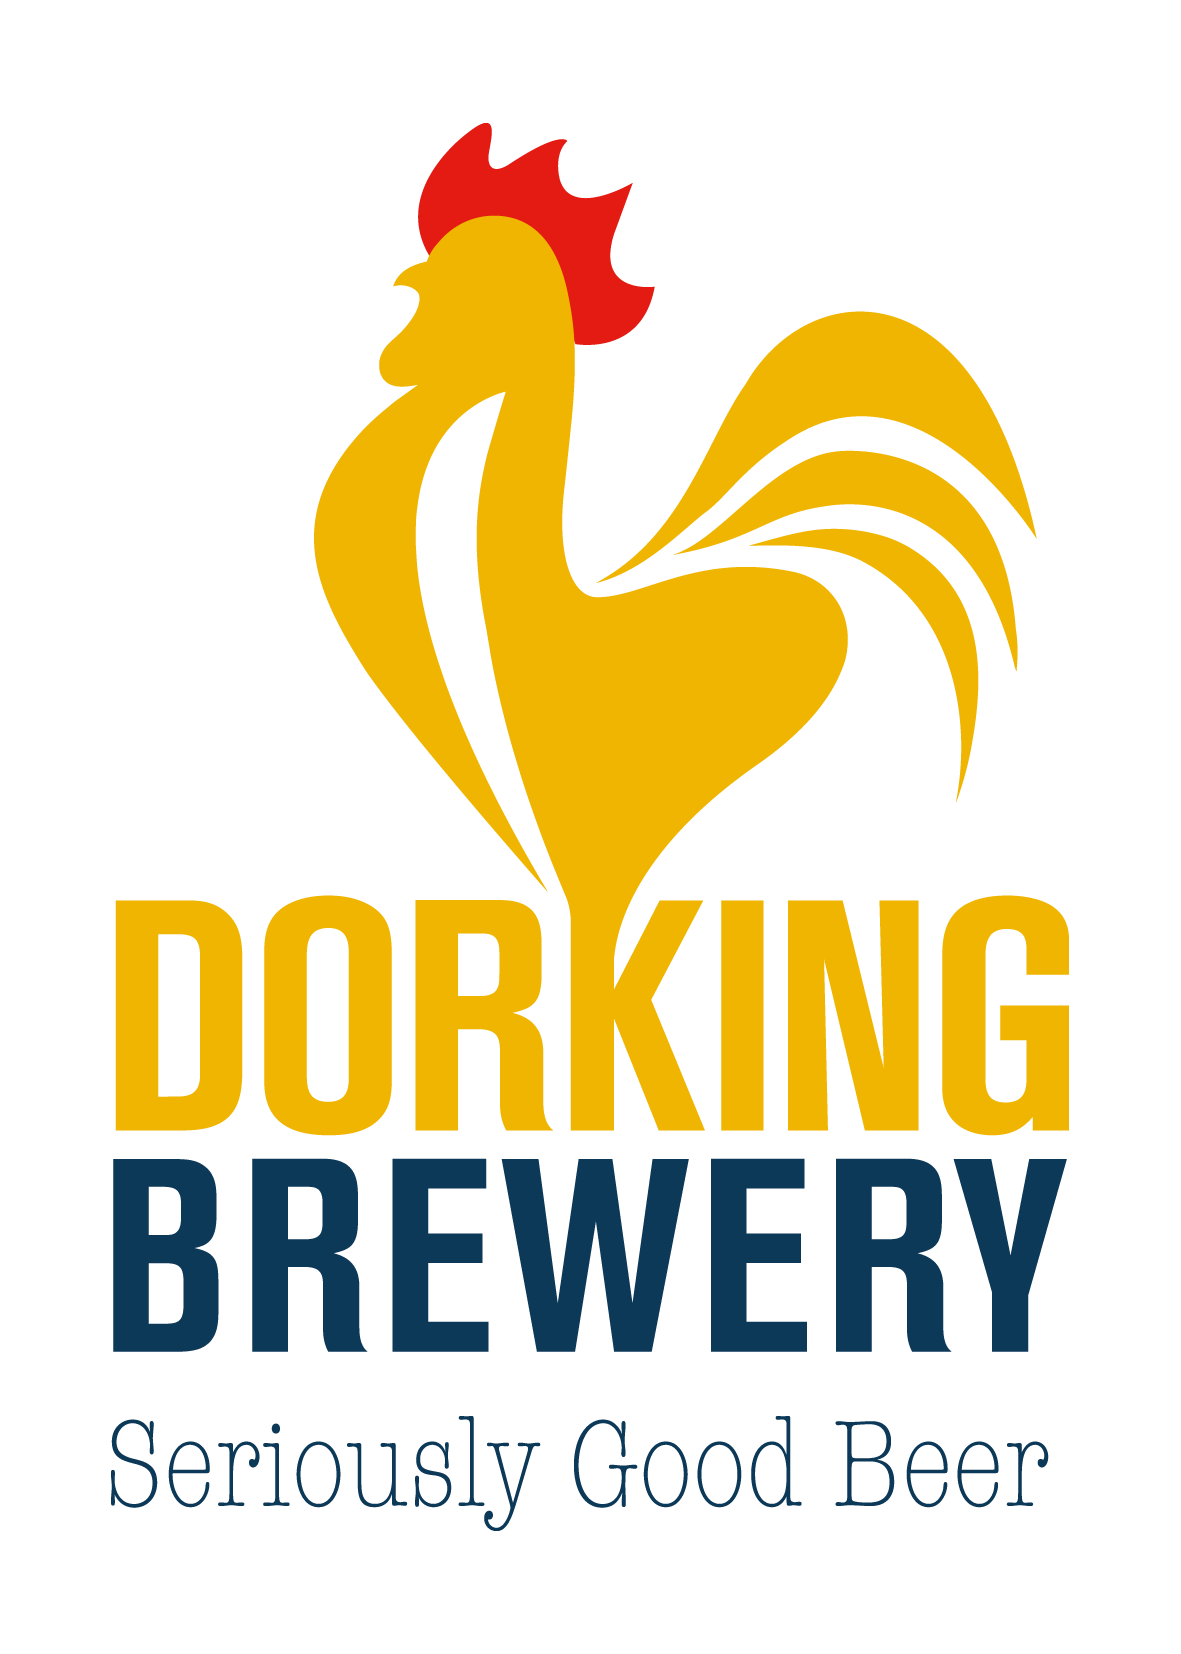 Dorking brewery